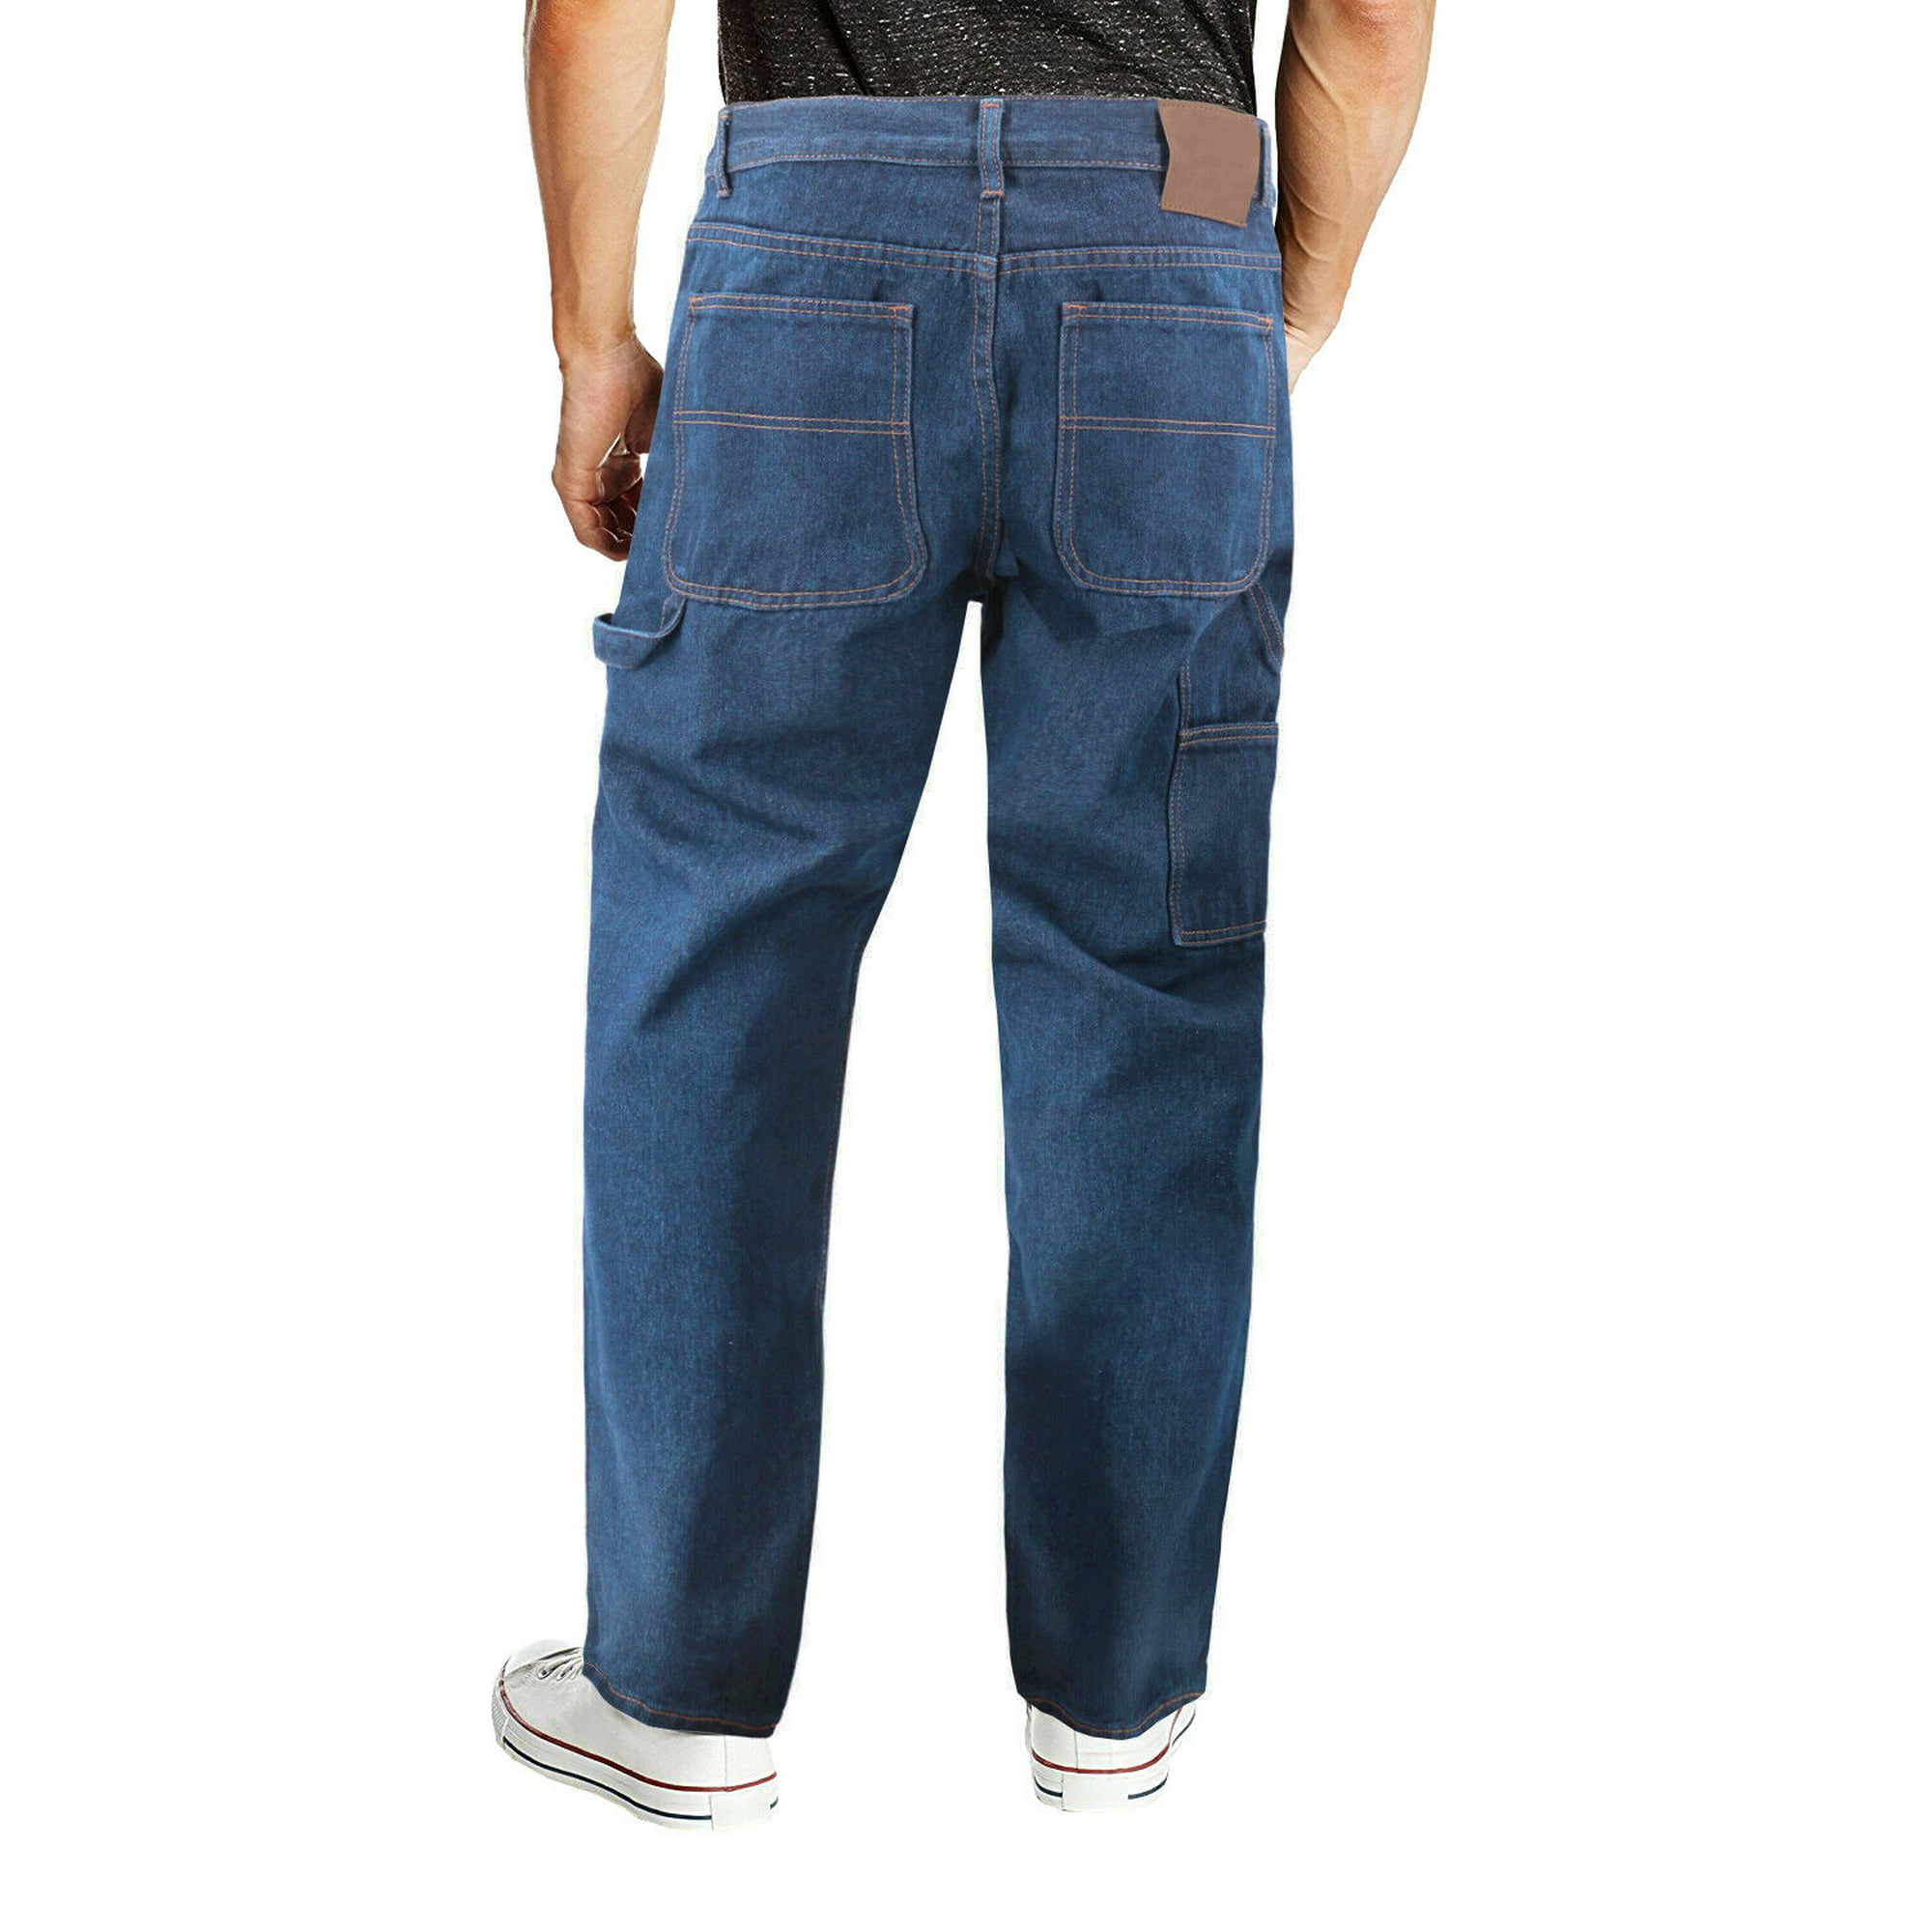 Men's Carpenter Jeans Hammer Loop Relaxed Fit Casual Denim Pants (Blue, 30x30) - Walmart.com